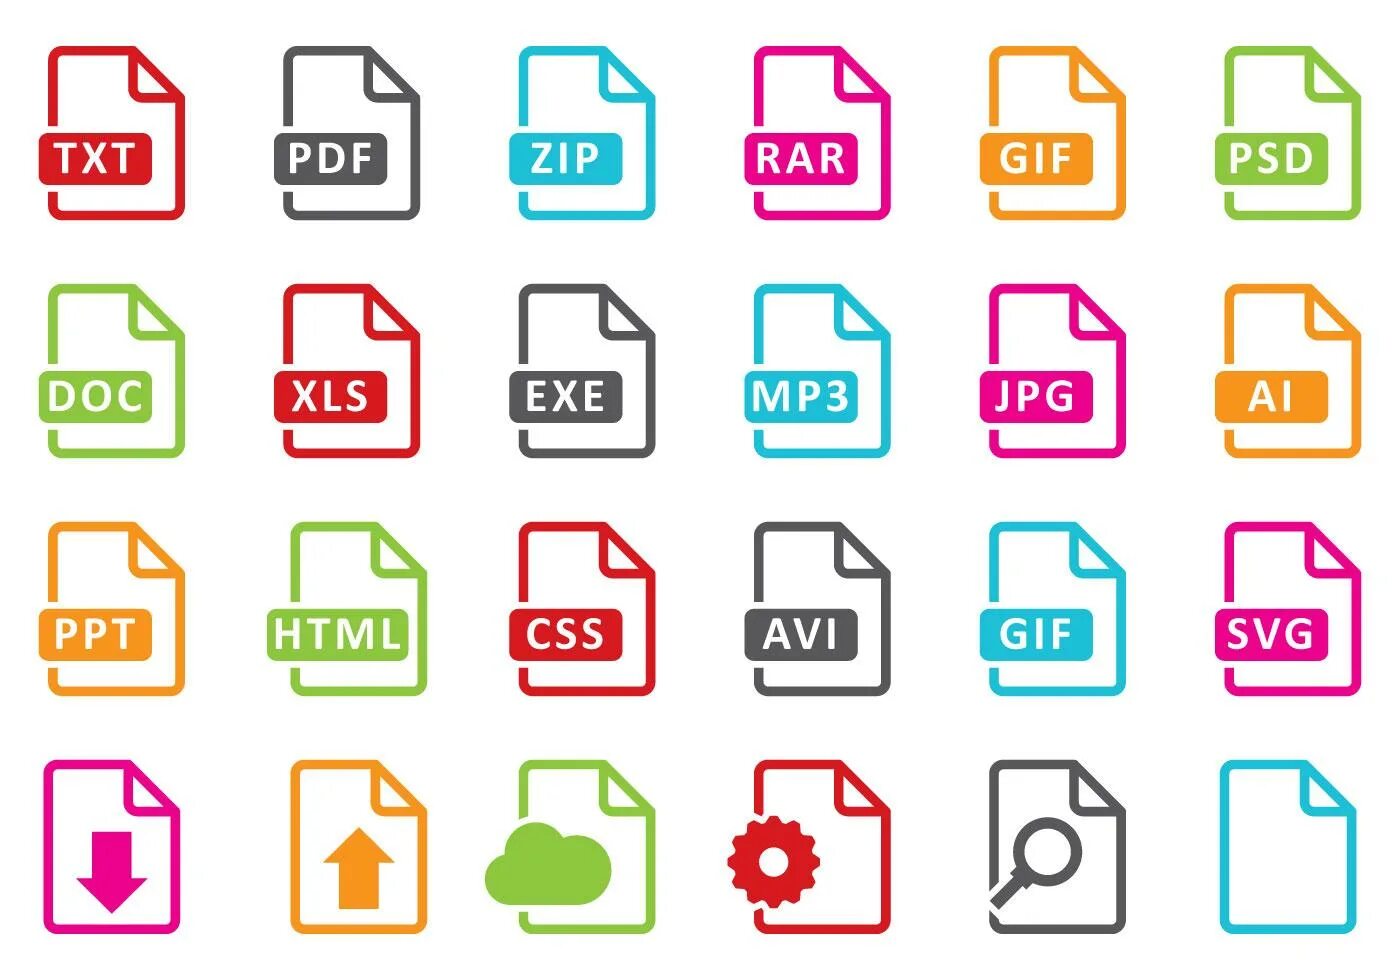 Doc d txt. Значки типов файлов. Значки для разных форматов. Иконки для разных типов файлов. Иконки расширений файлов.